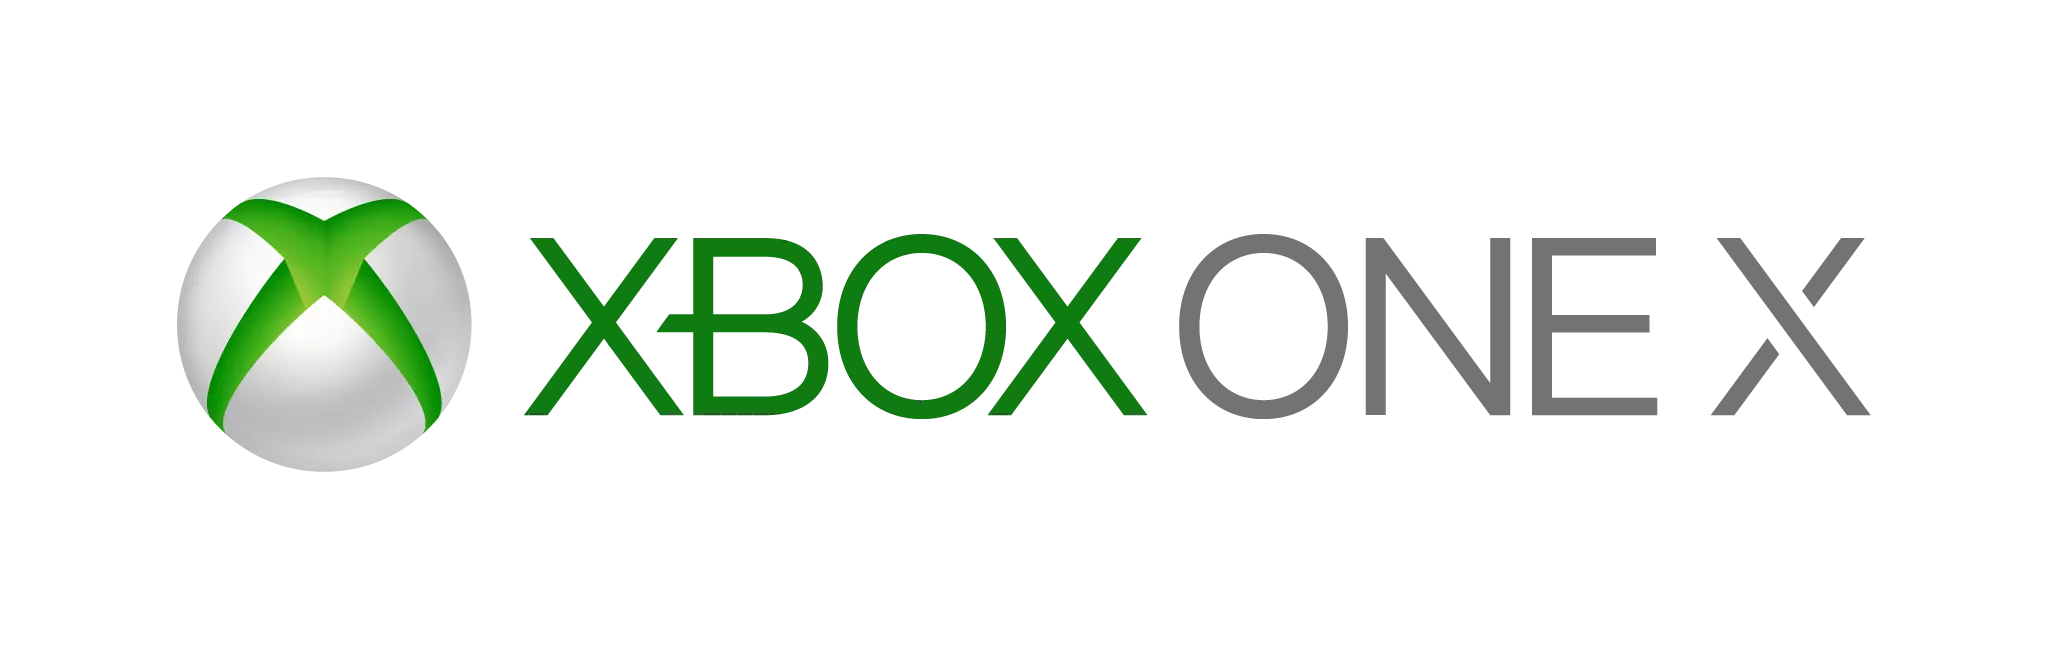 Xbox One X
Во время своей пресс-конференции E3 2017 корпорация Microsoft представила Xbox One X — высокопроизводительную версию Xbox One, которая была выпущена 7 ноября 2017 года.